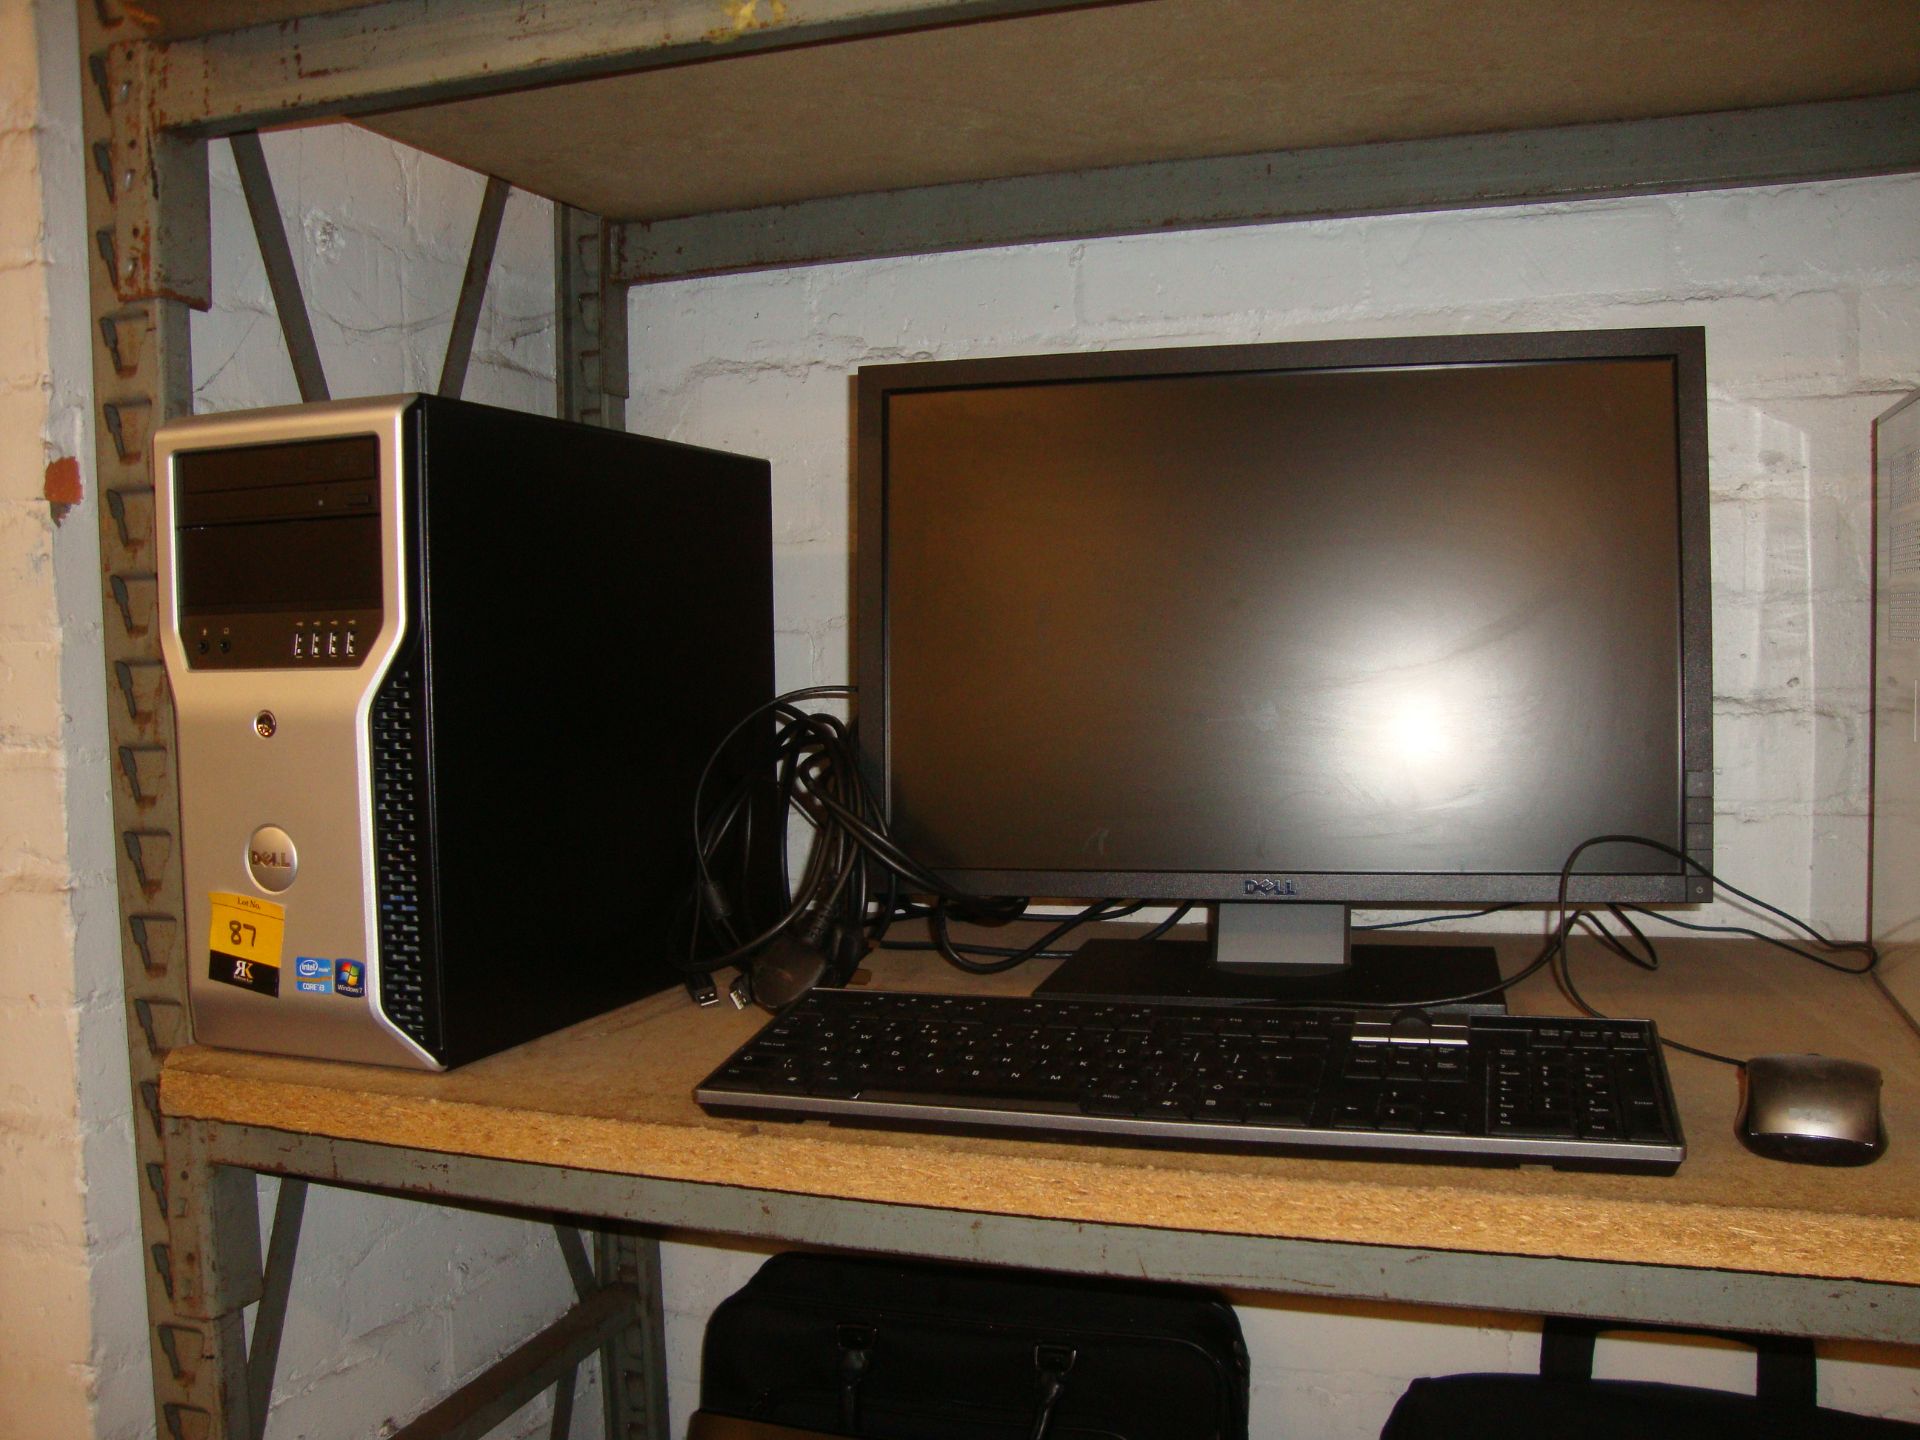 Dell Precision T1600 desktop Core i3 computer with Windows 7 including Dell widescreen LCD monitor - Image 5 of 9